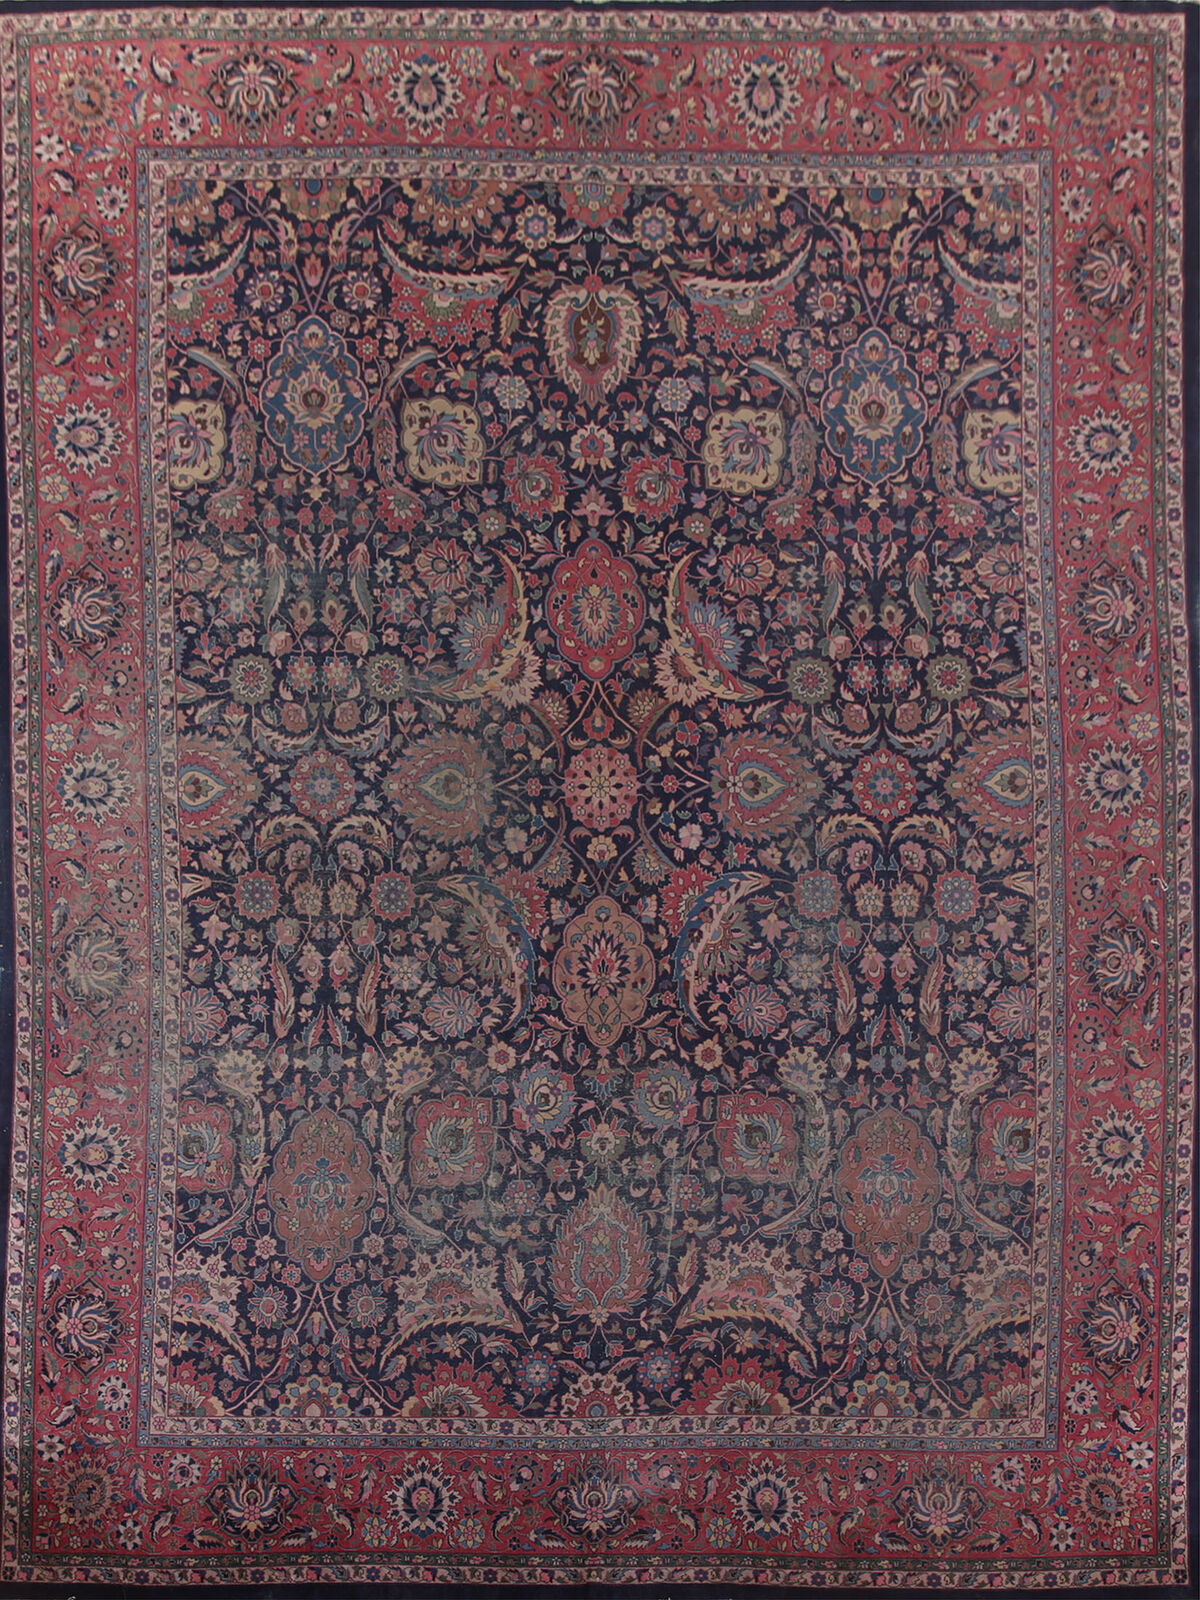 Pre-1900 Navy Blue Vegetable Dye Tebriz Antique Rug 10x15 Handmade Large Carpet